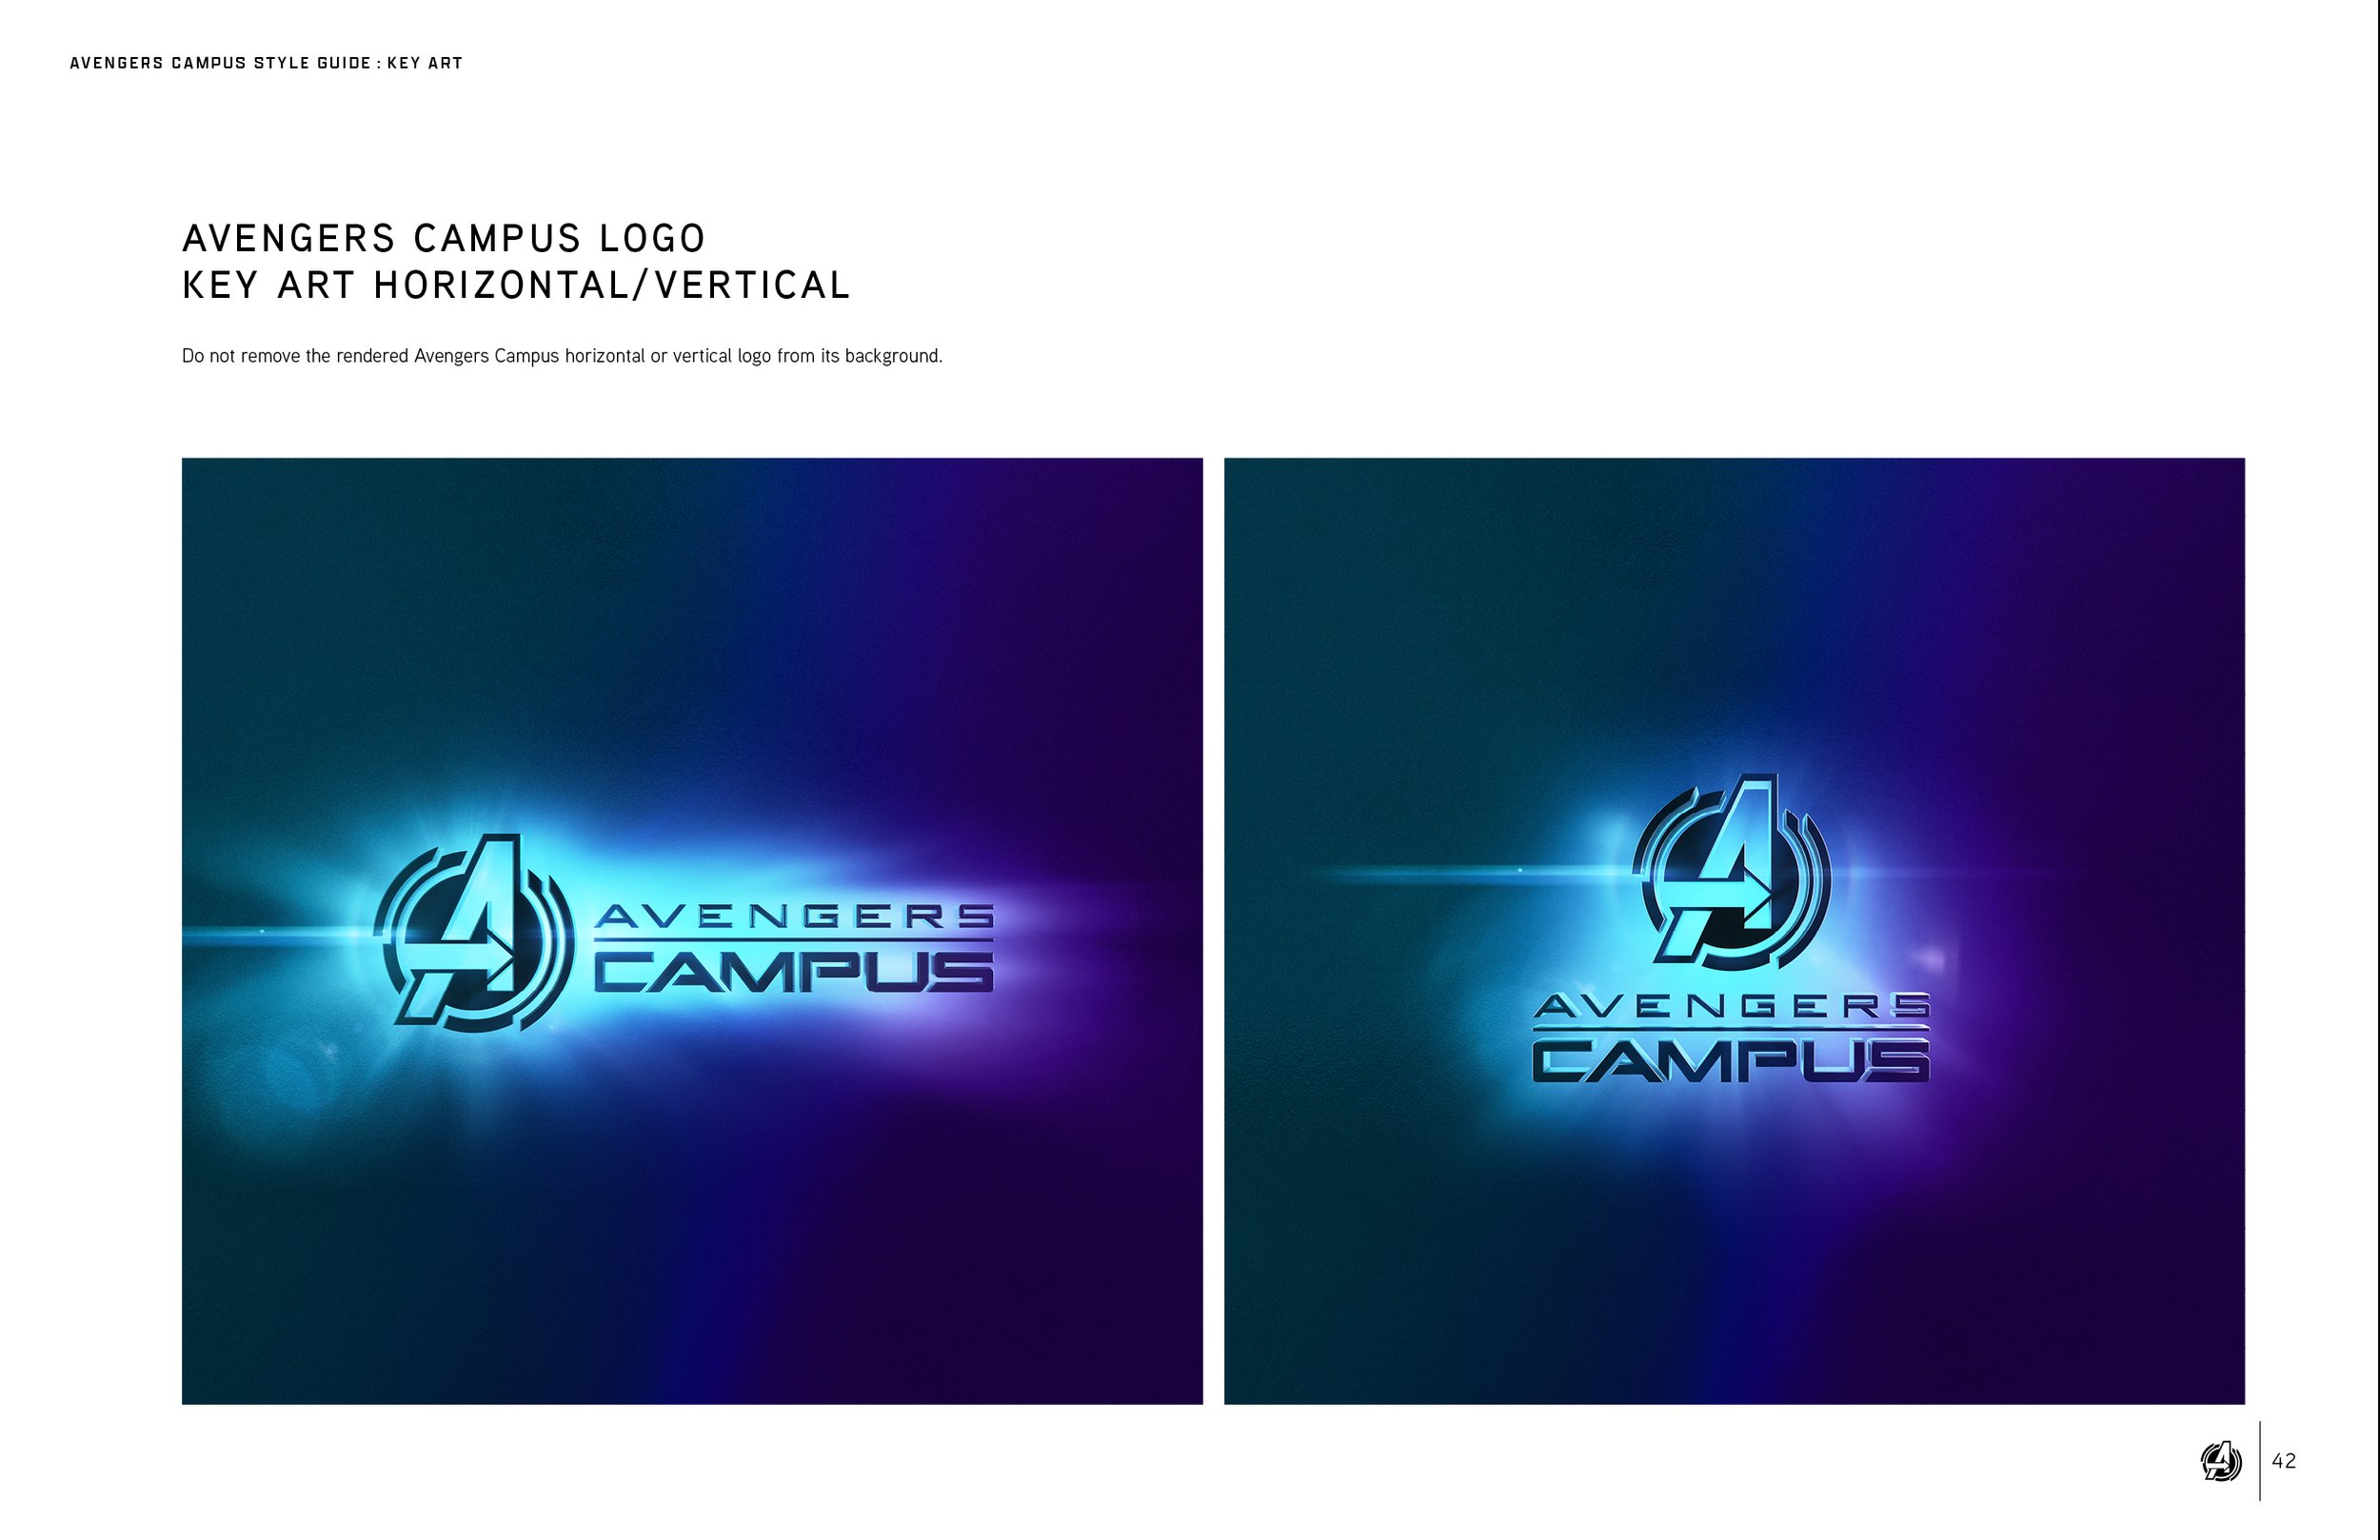 AvengersCampus_StyleGuide_Website_42.jpg